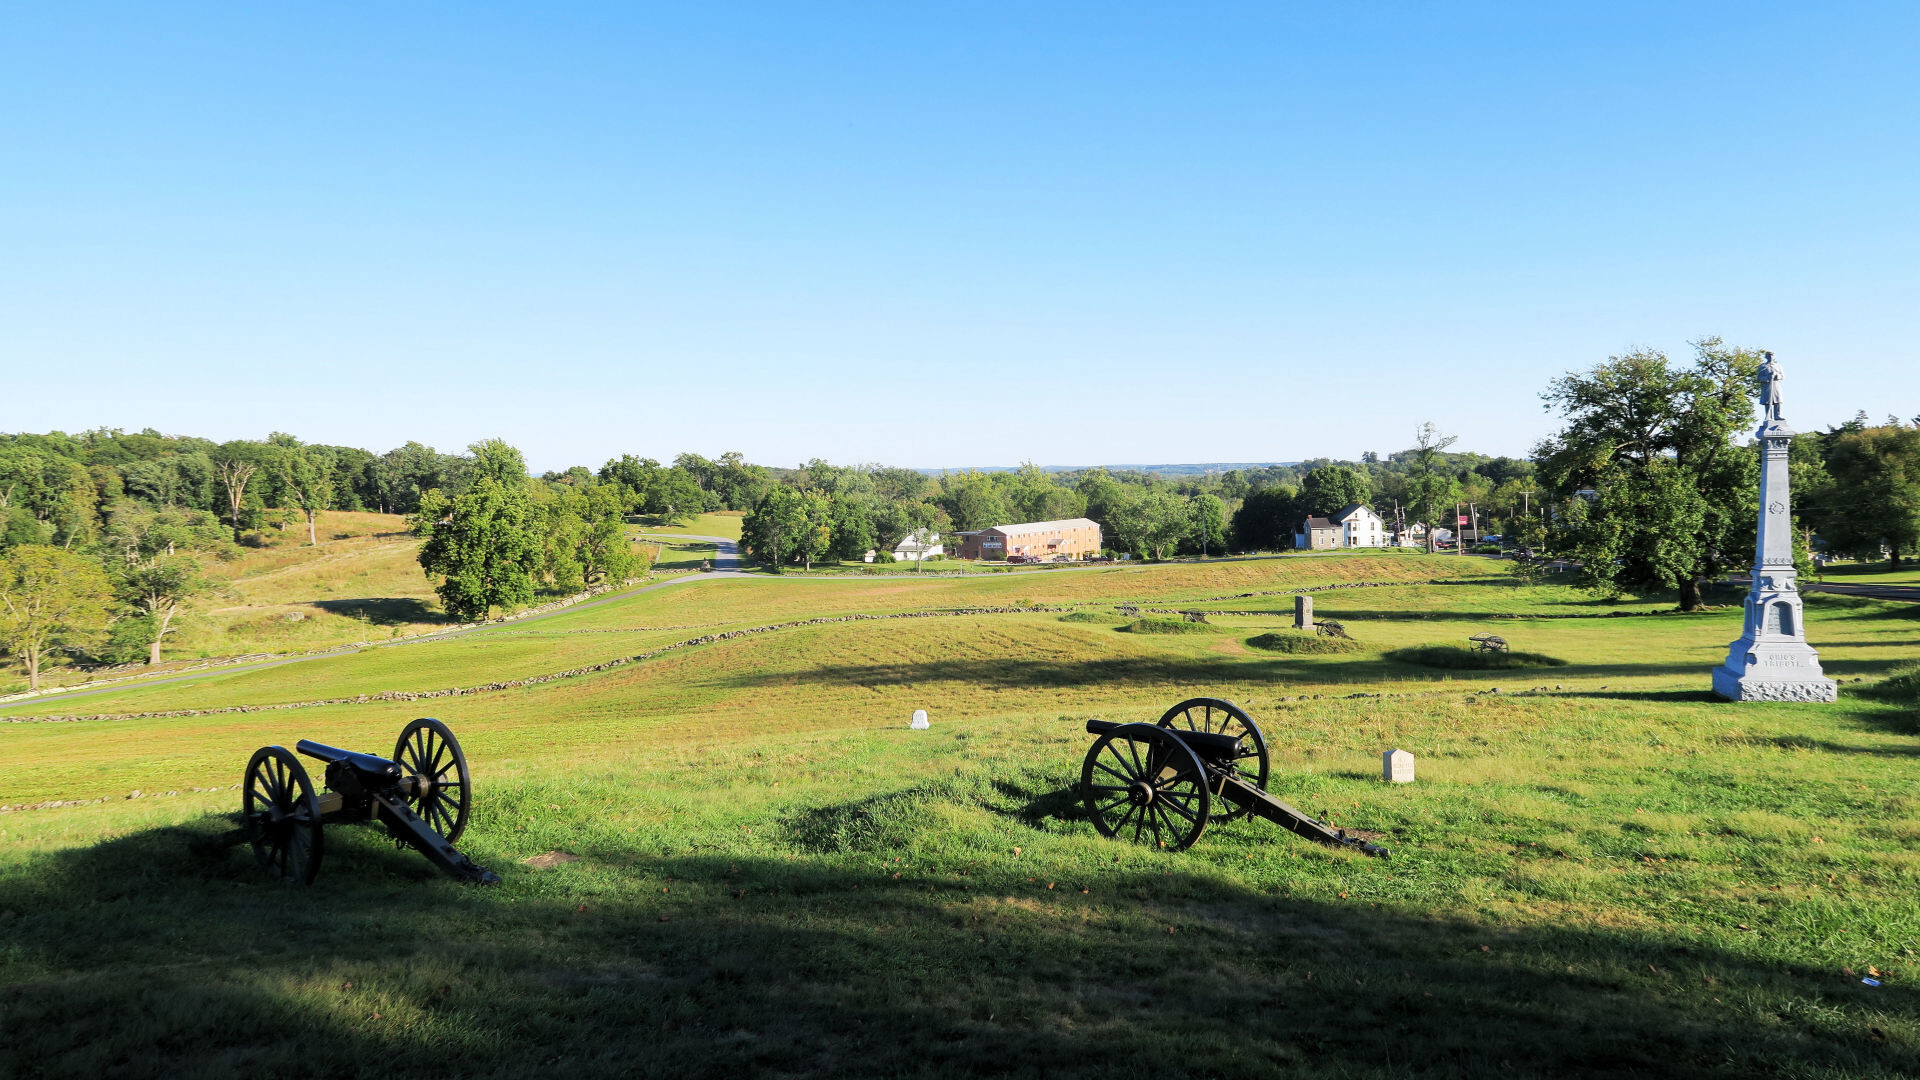 Gettysburg: The memorial monuments at the battlefield at the National Park in Pennsylvania, American Civil War. 1920x1080 Full HD Wallpaper.